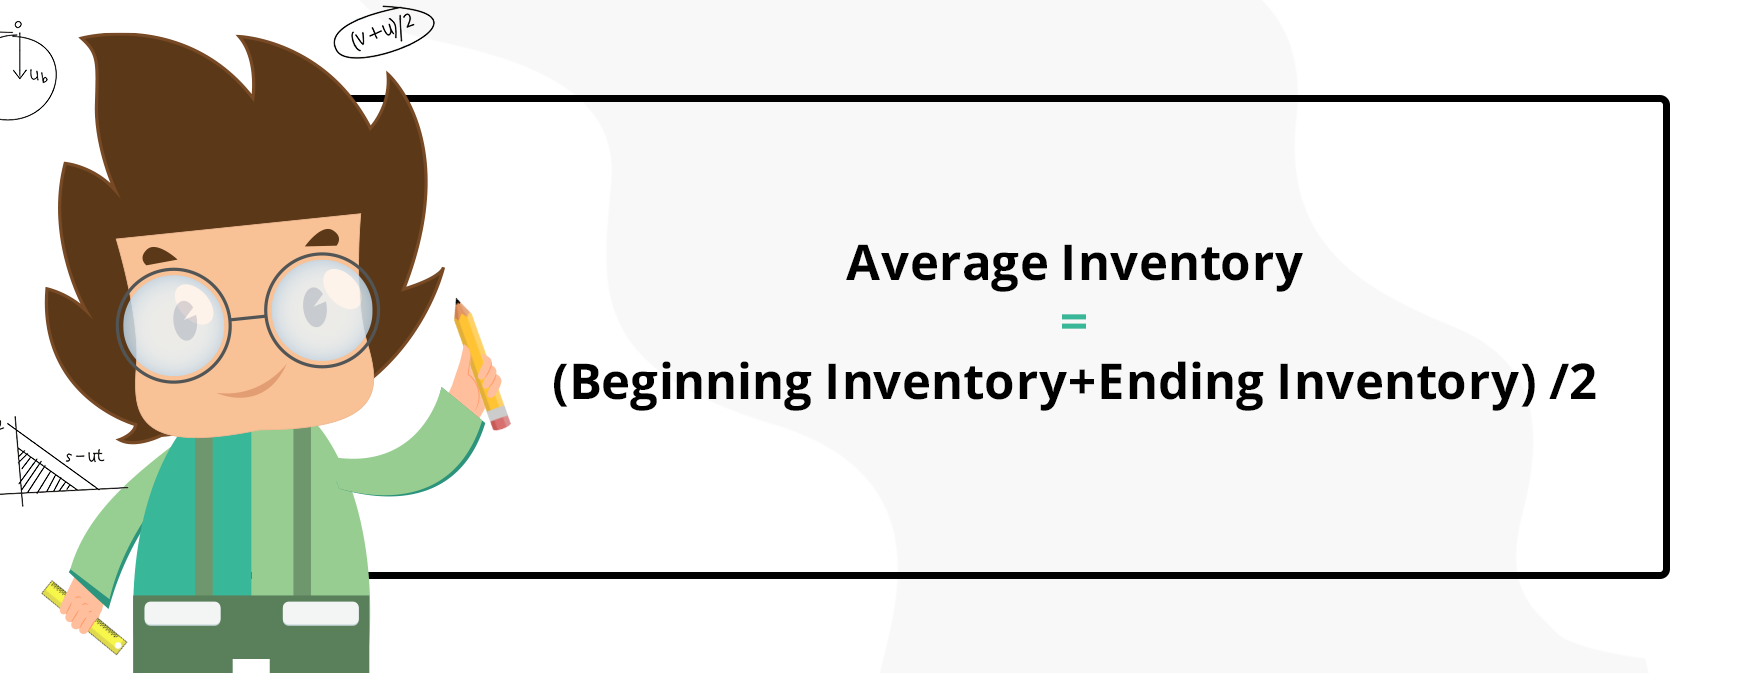 Average Inventory